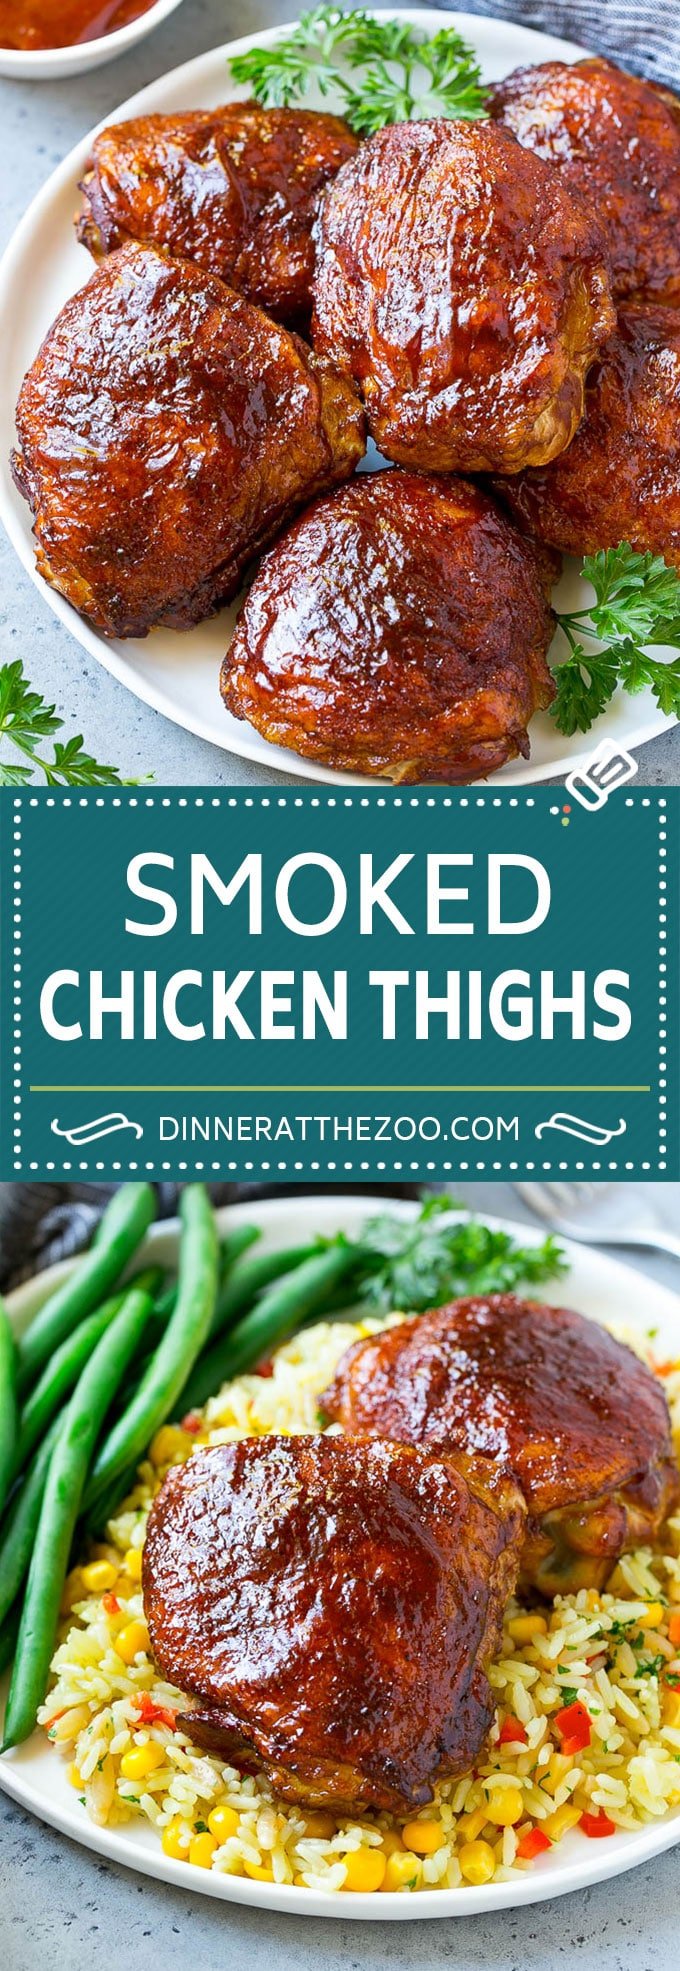 Smoked Chicken Thighs Recipe | Barbecue Chicken Thighs | Easy Chicken Thighs #chicken #barbecue #smoker #dinner #dinneratthezoo